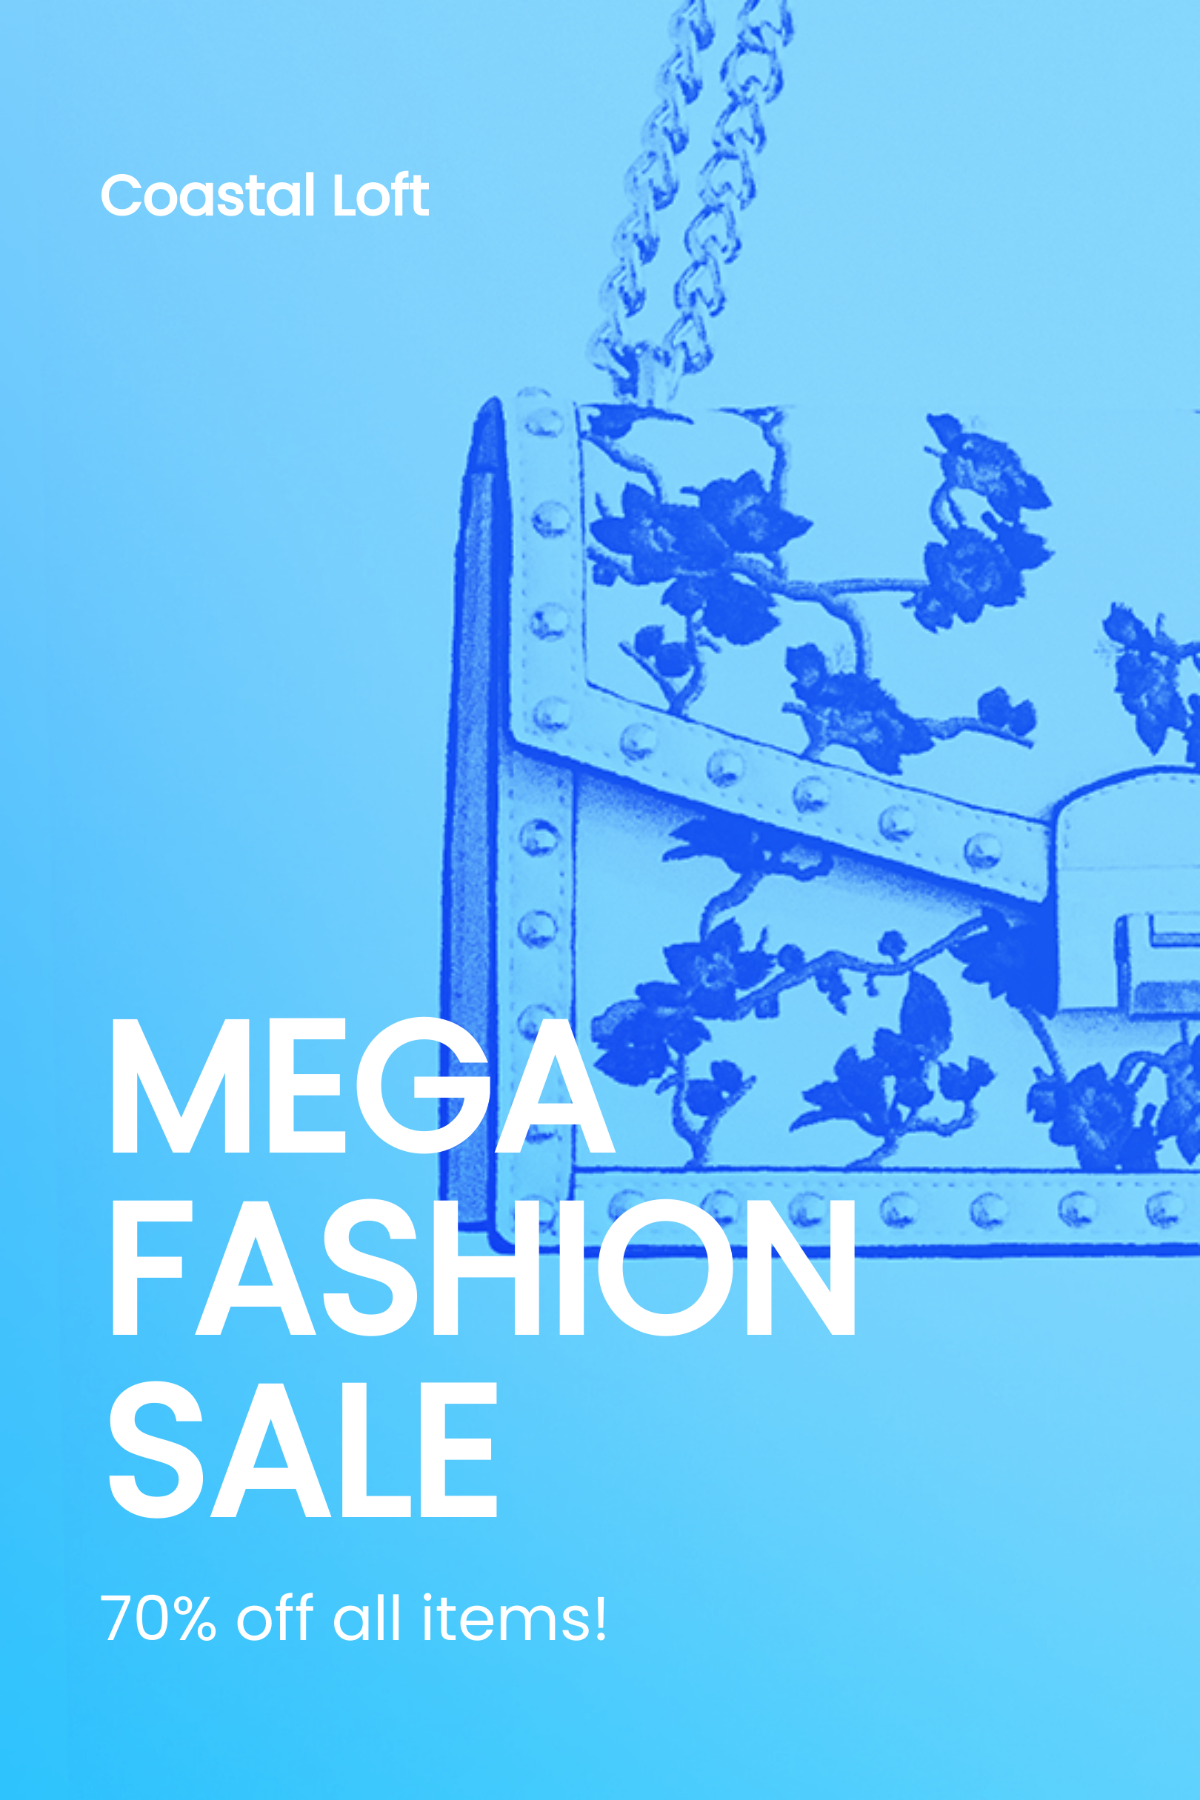 Fashion Sale Promotion Tumblr Post Template